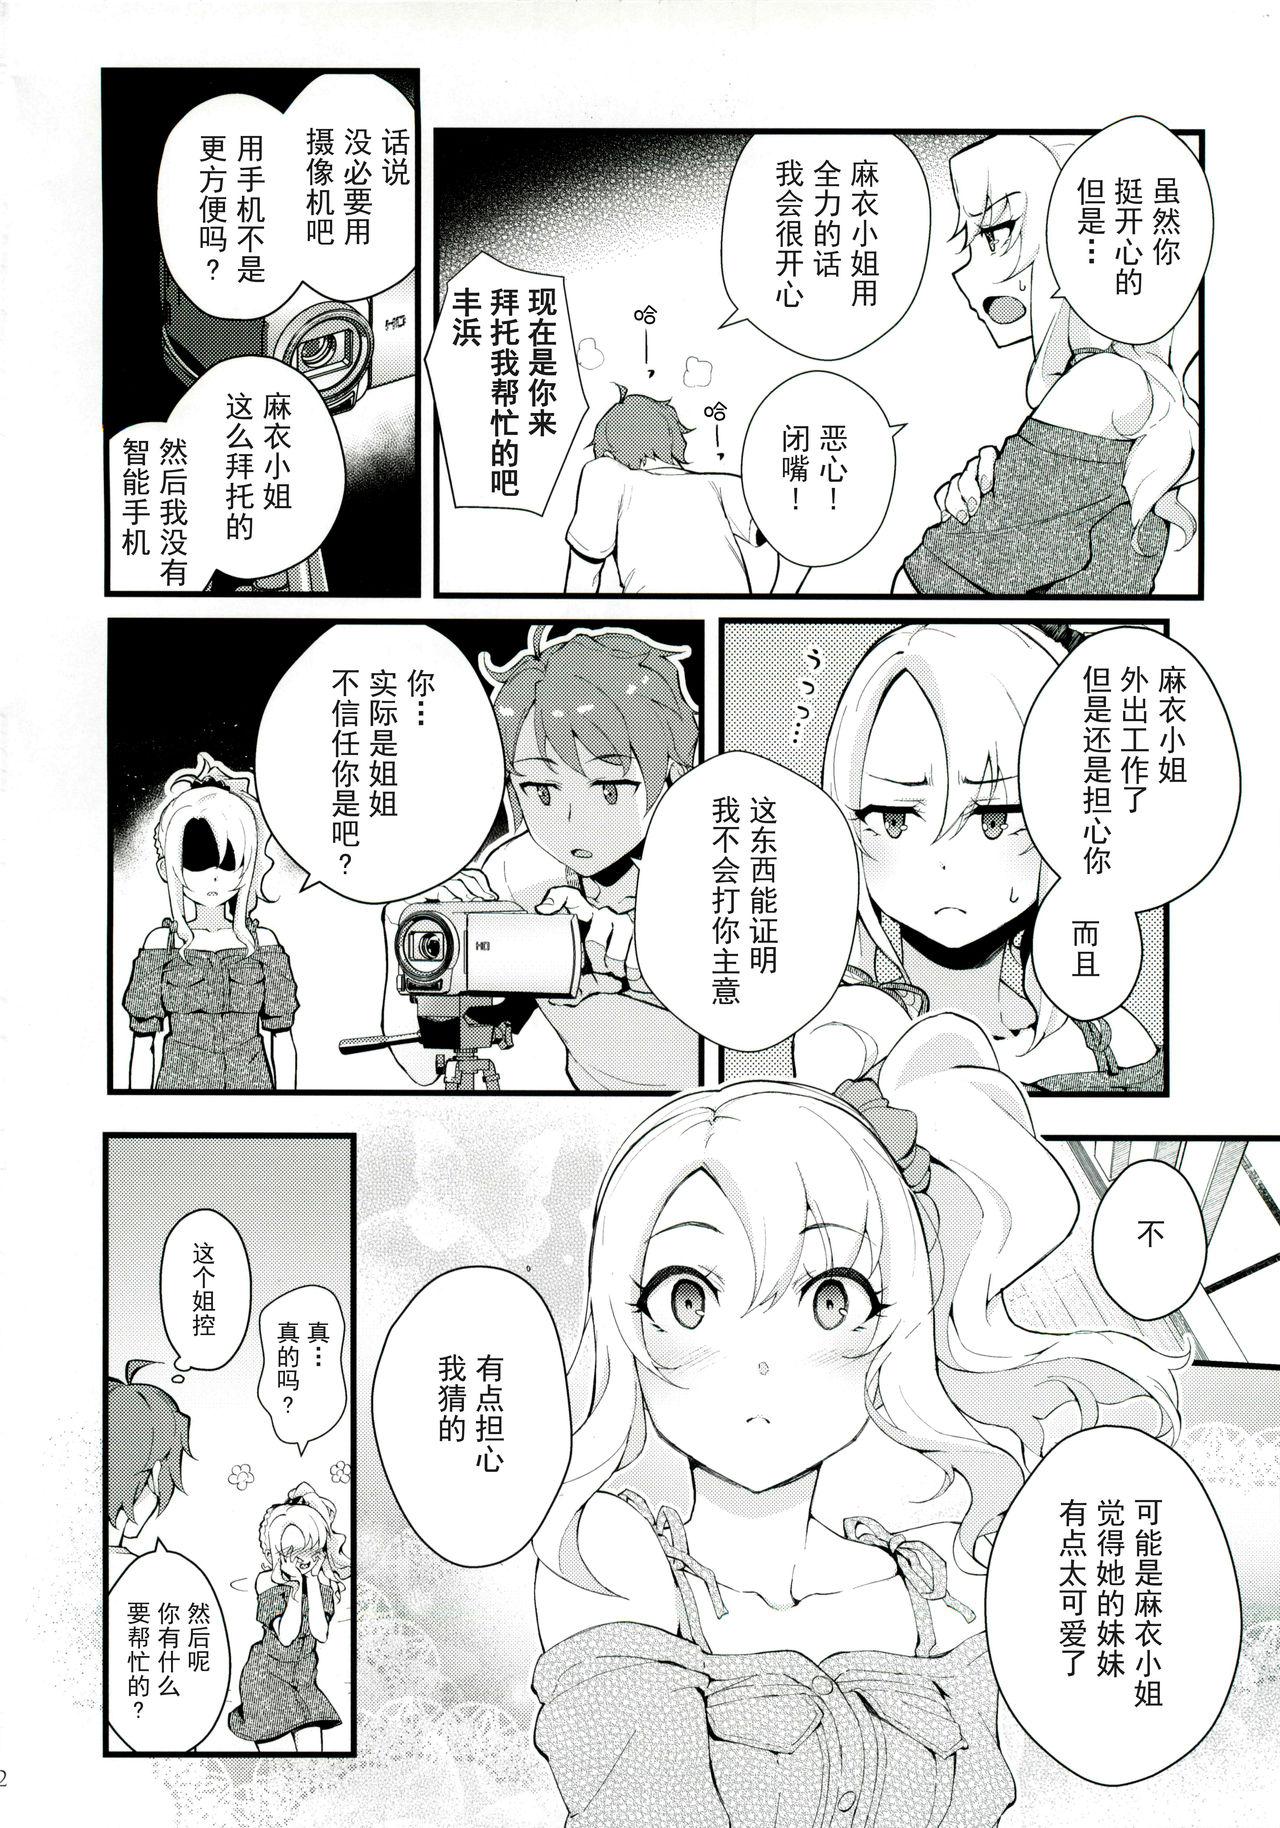 Cum In Mouth Sisters Panic - Seishun buta yarou wa bunny girl senpai no yume o minai Abg - Page 3